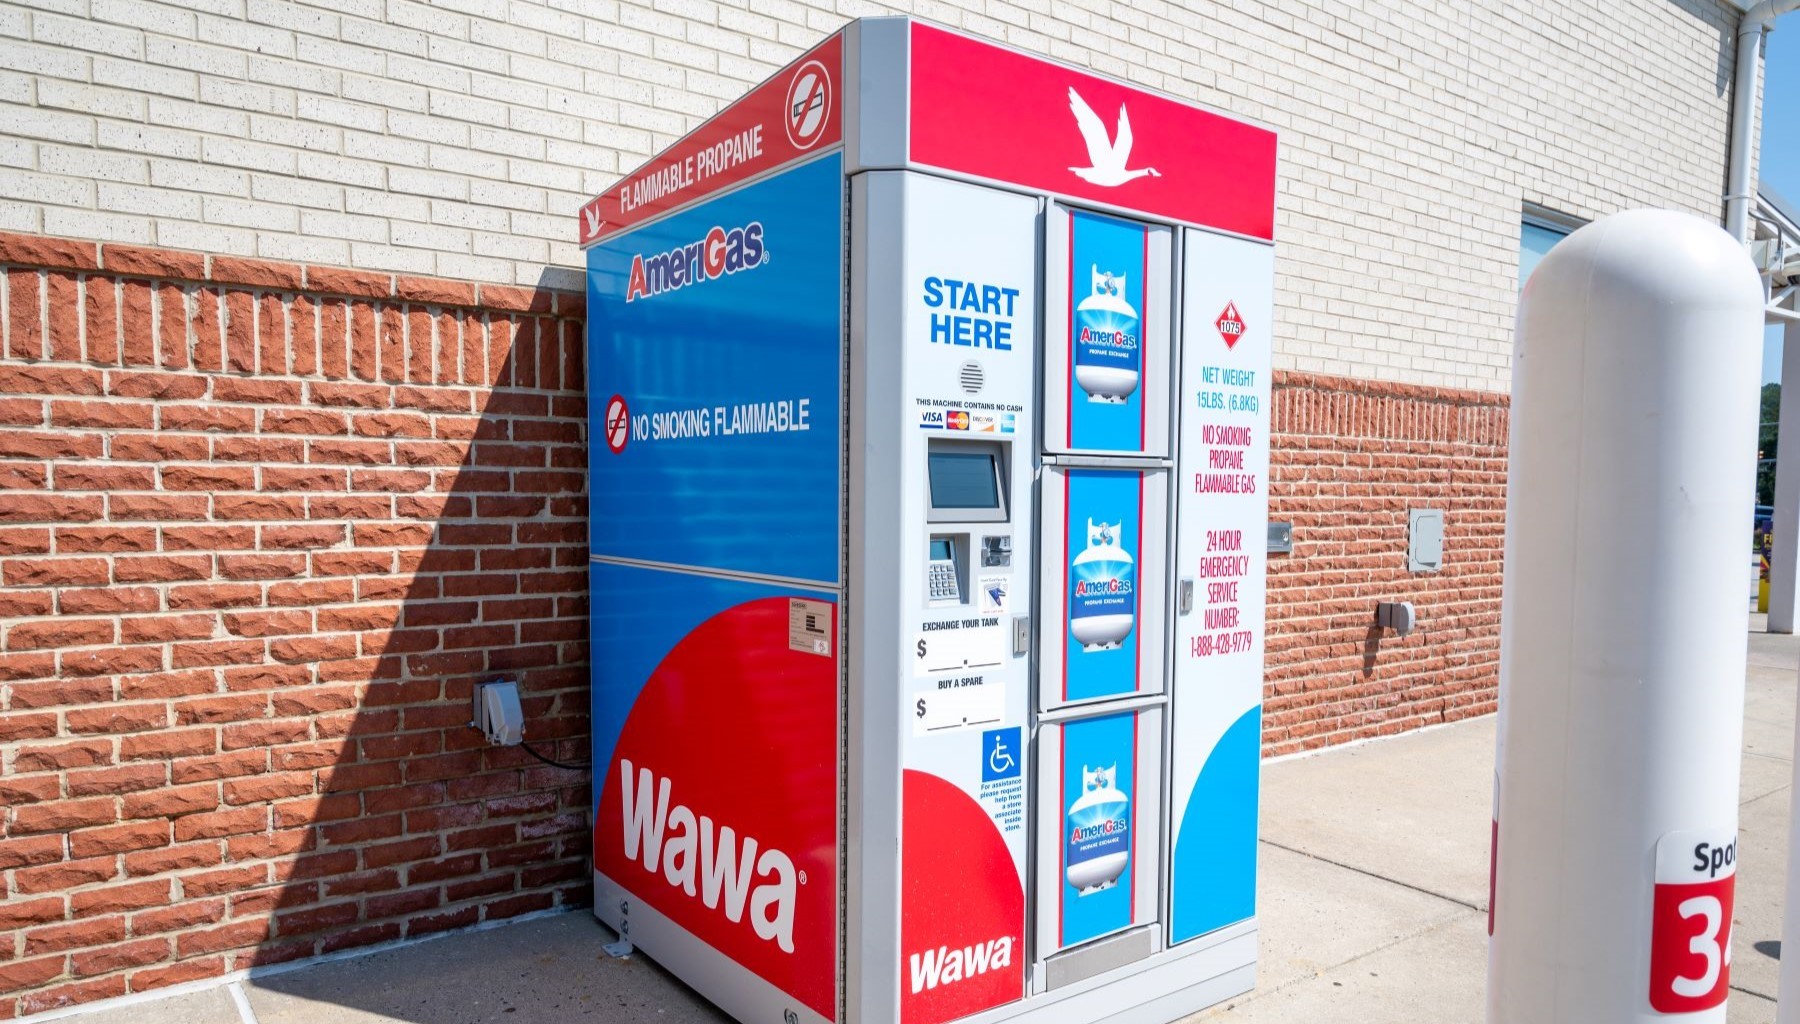 AmeriGas propane grill tank exchange vending machine at a Wawa